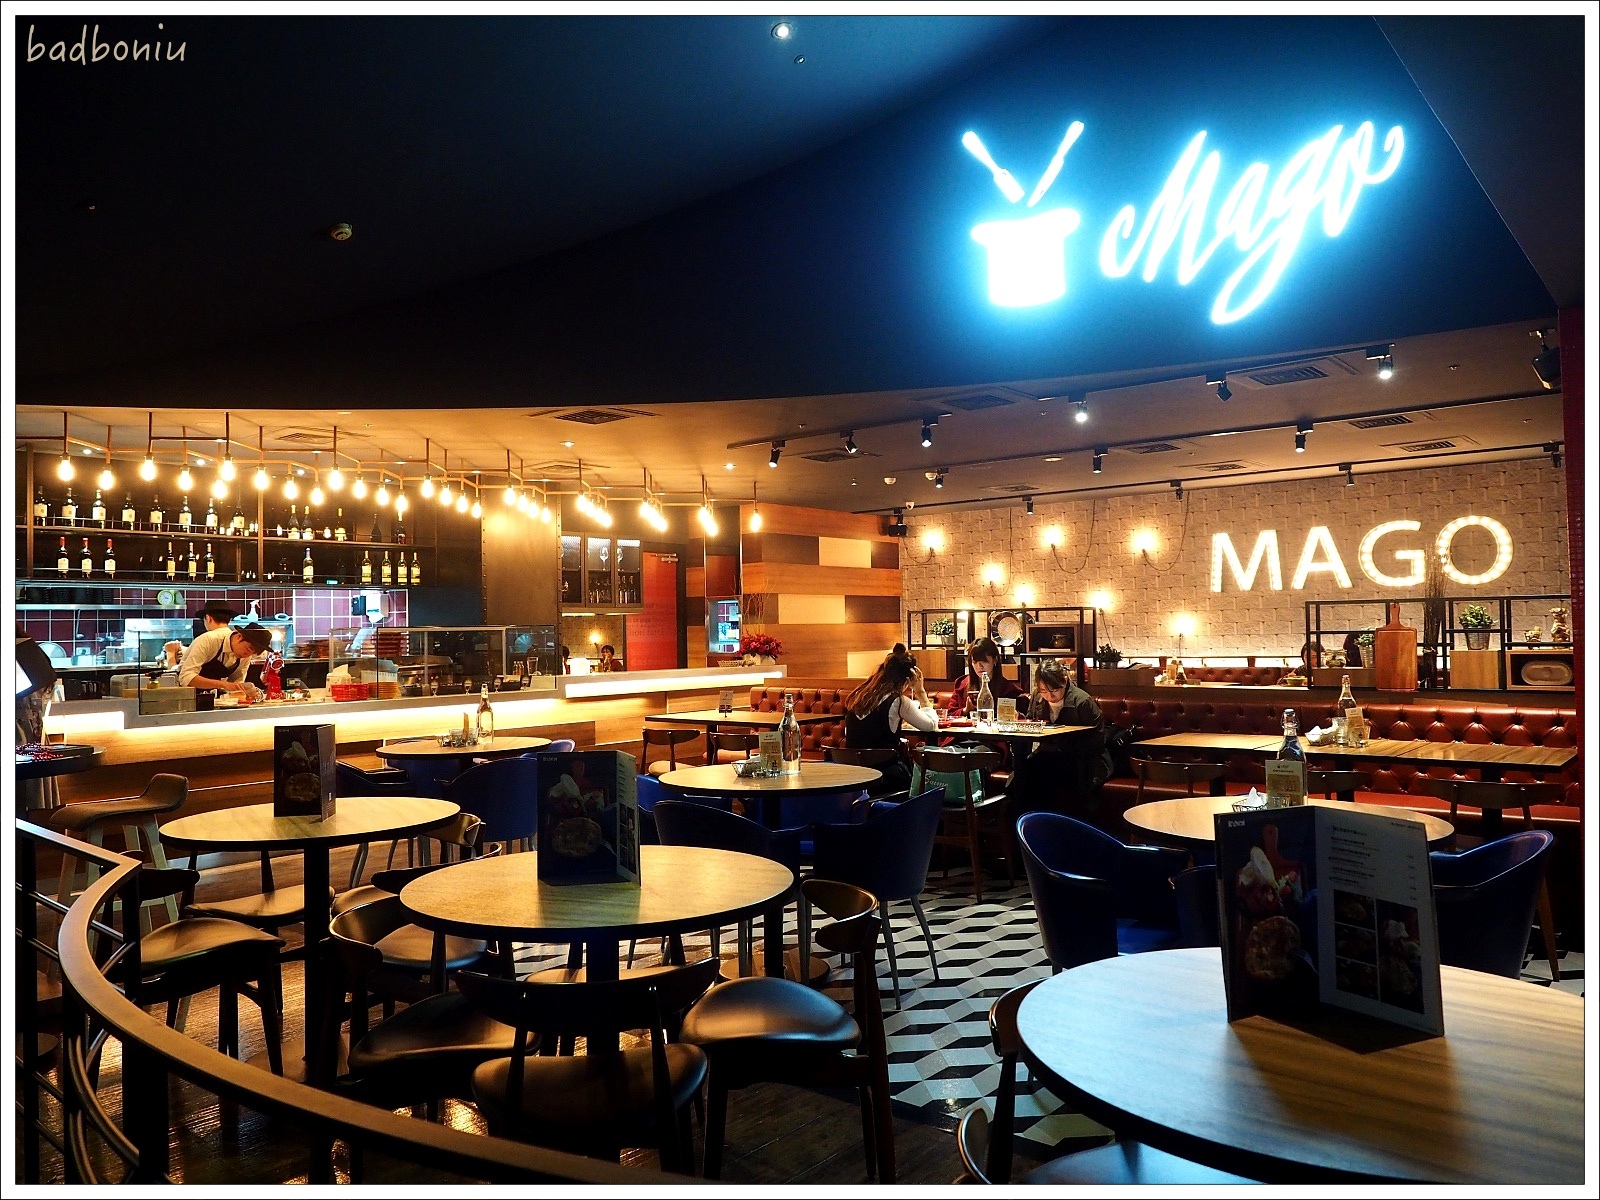 mago 料理魔術美學西班牙餐廳,信義 西班牙菜,台北 西班牙餐廳,威秀 餐廳 @壞波妞の旅行食踨